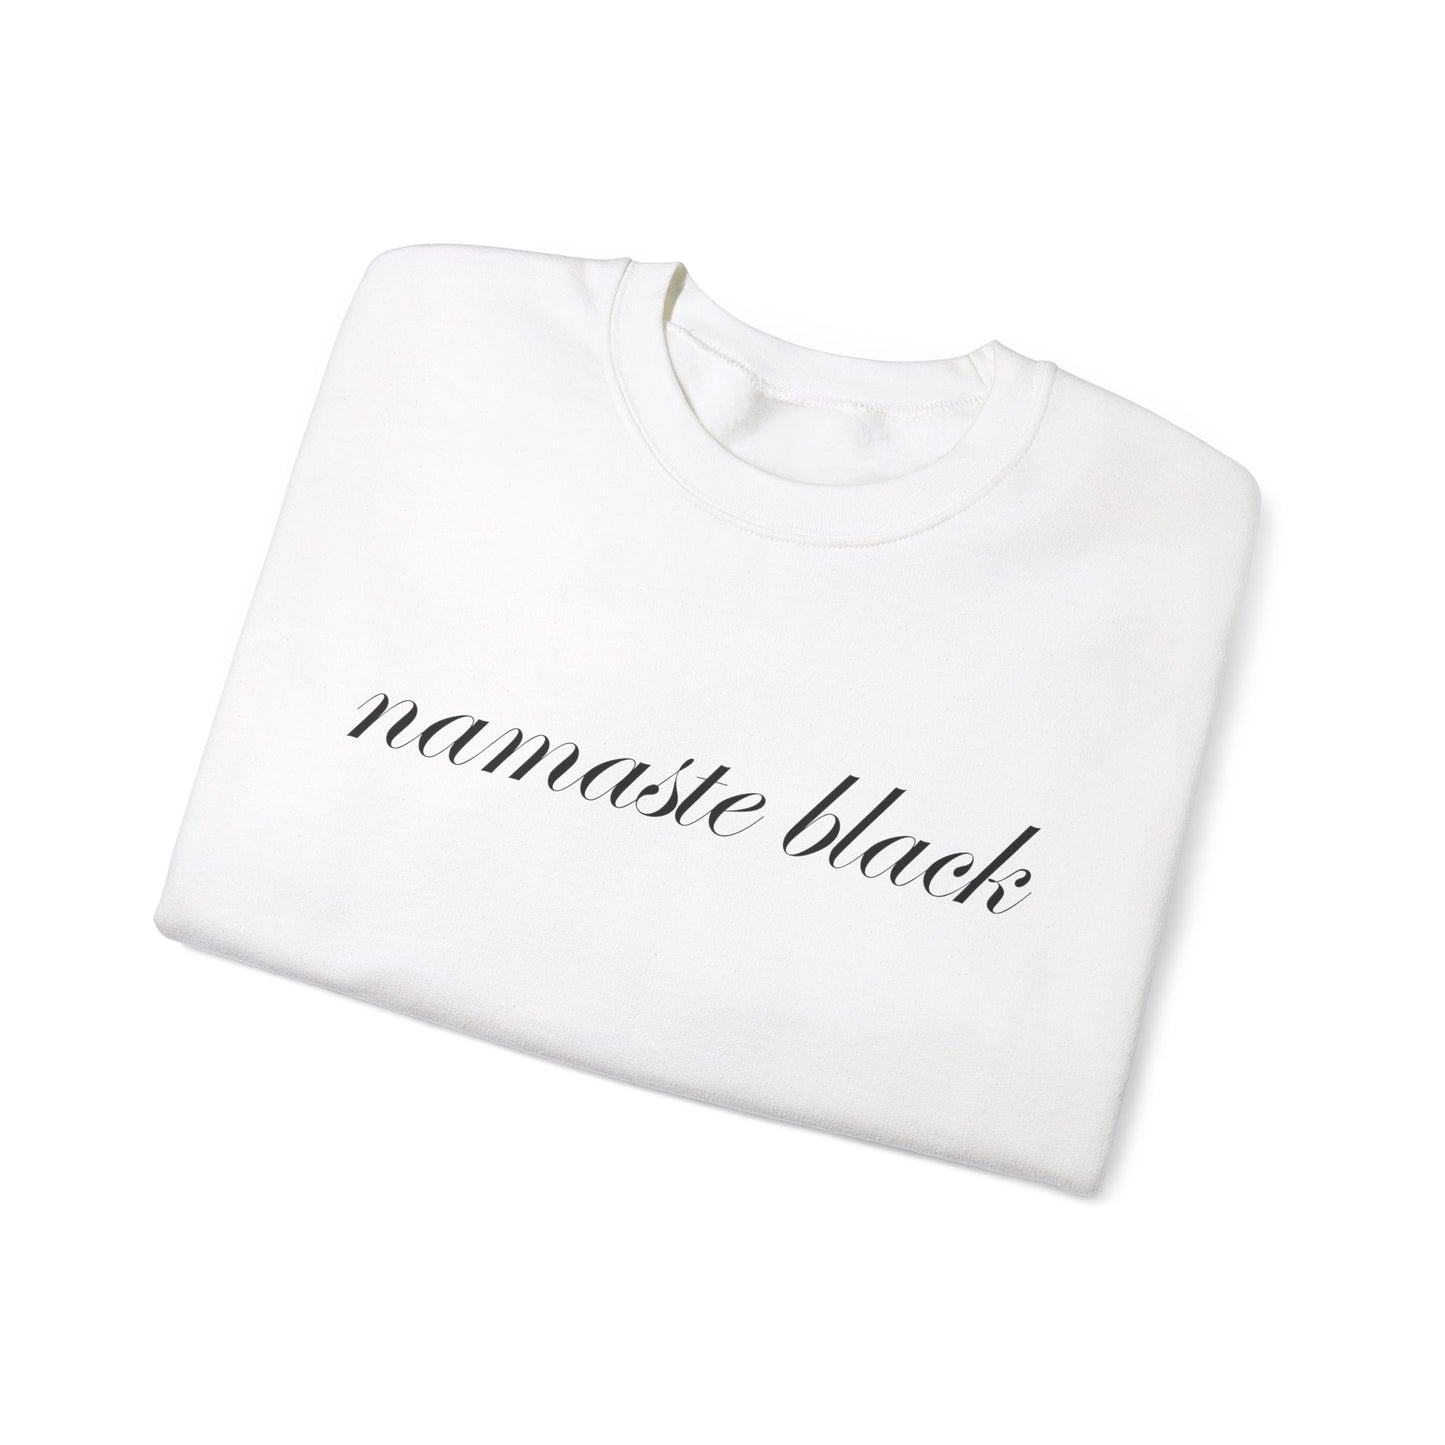 Namaste Black Sweatshirt